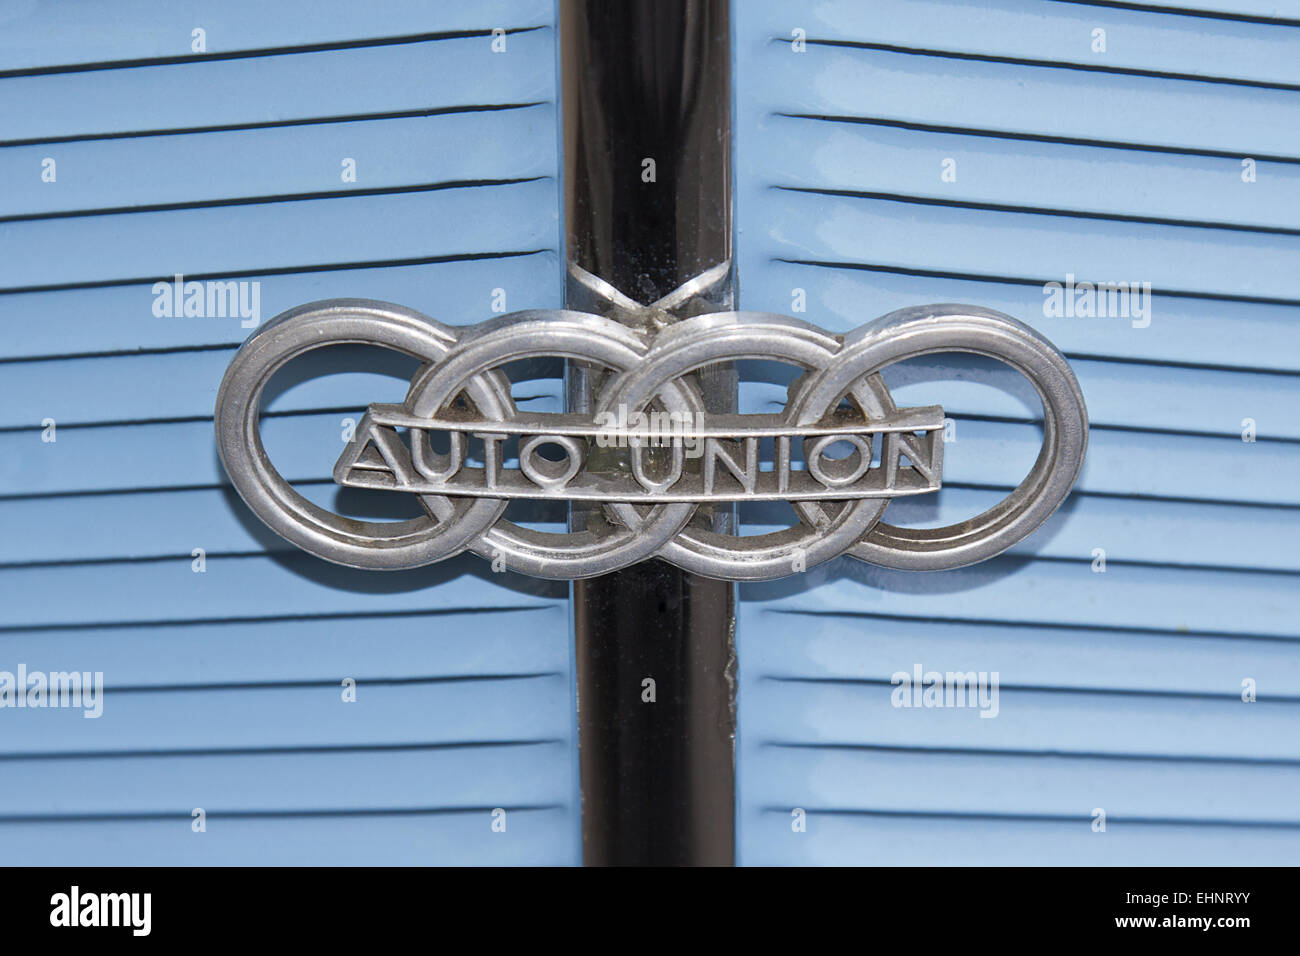 Auto Union Stock Photo